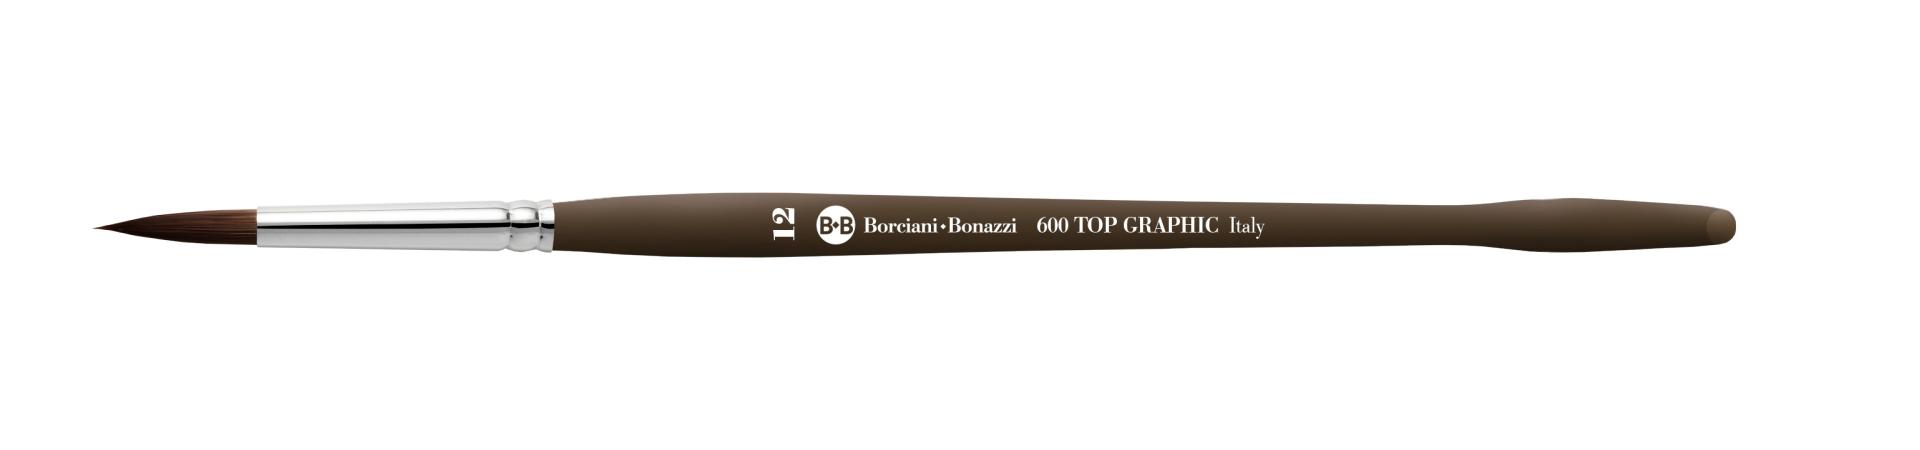 Brush Calligraphy: which fibers to choose? - Borciani e Bonazzi